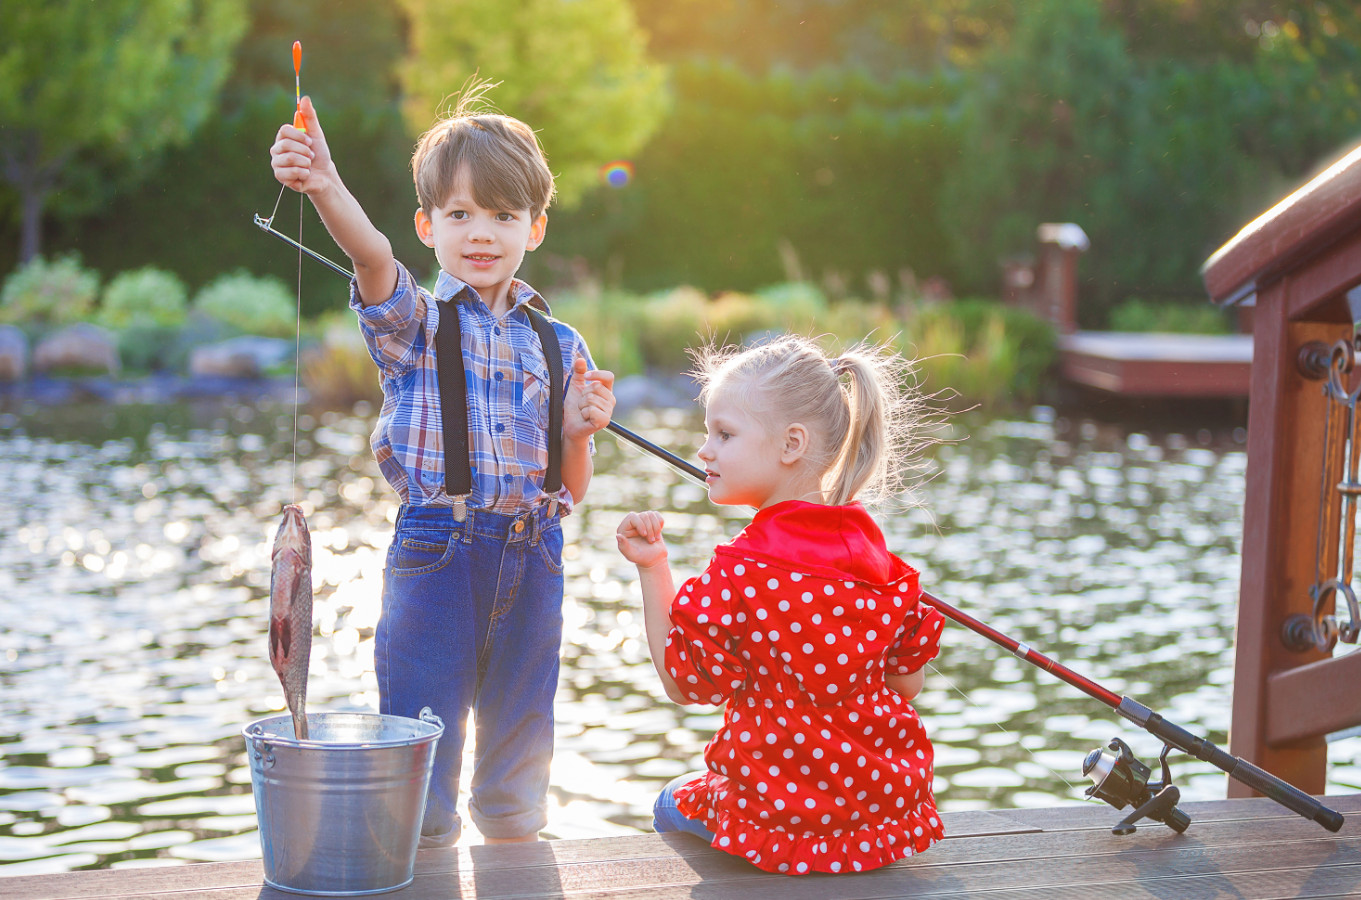 https://rustyangler.com/images/kids-fishing.jpg